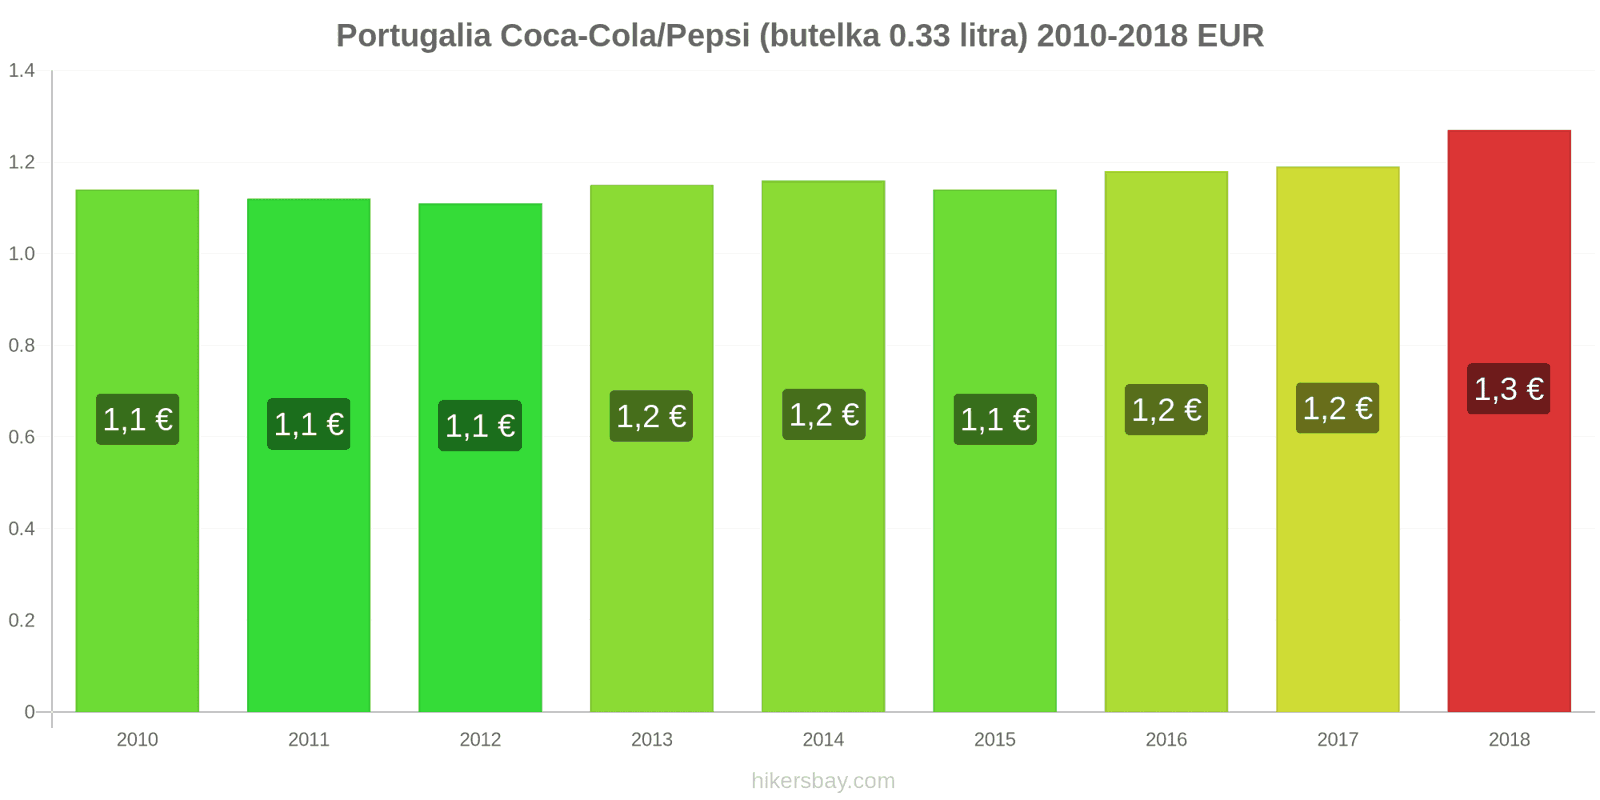 Portugalia zmiany cen Coca-Cola/Pepsi (butelka 0.33 litra) hikersbay.com